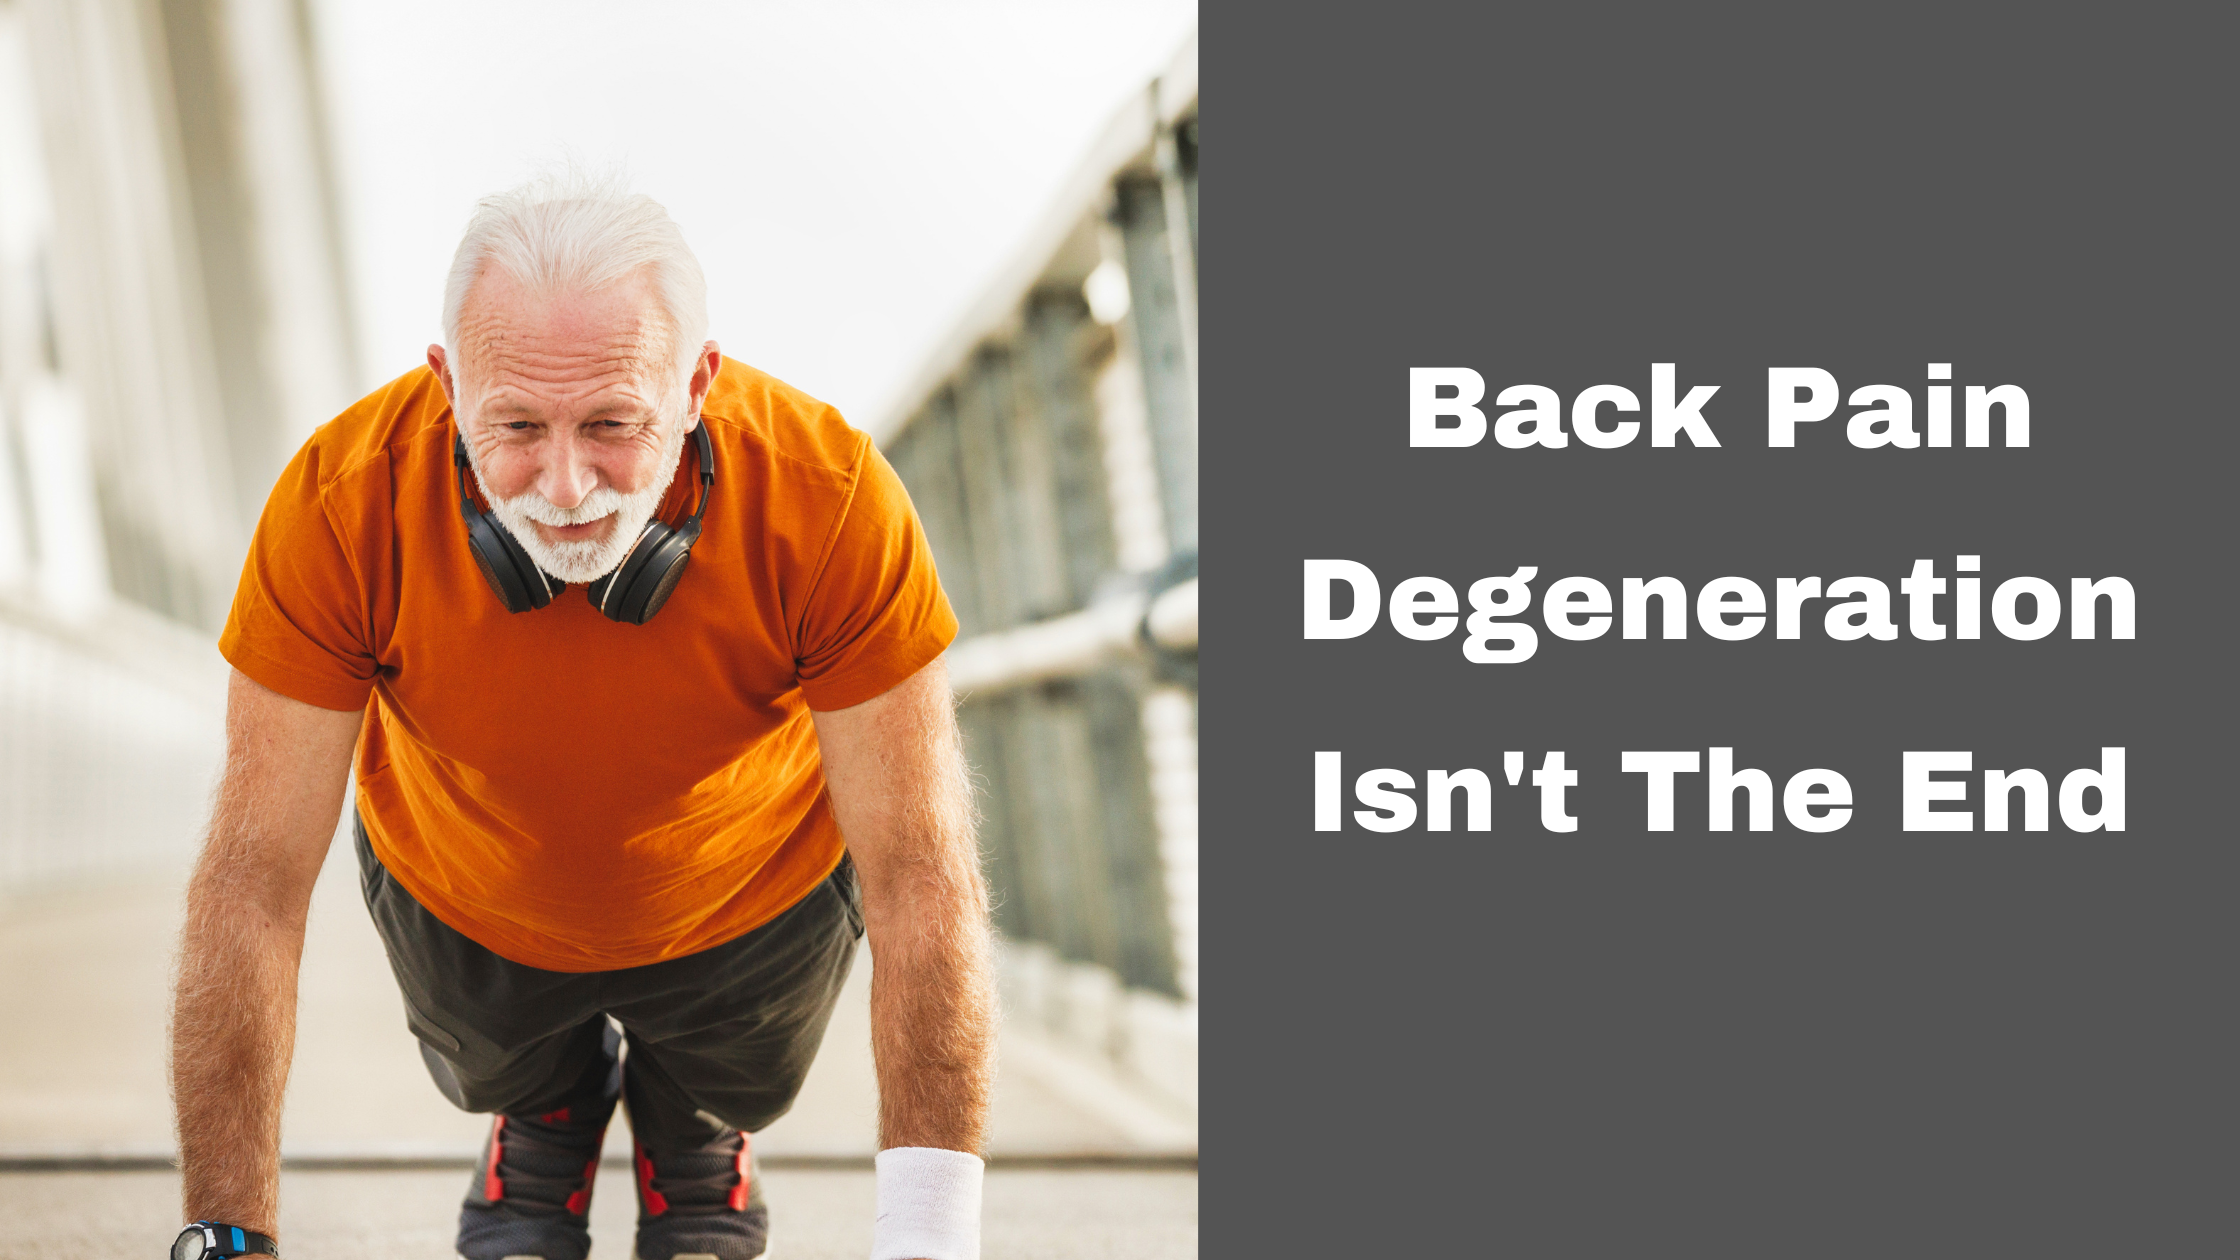 Degeneration Back Pain